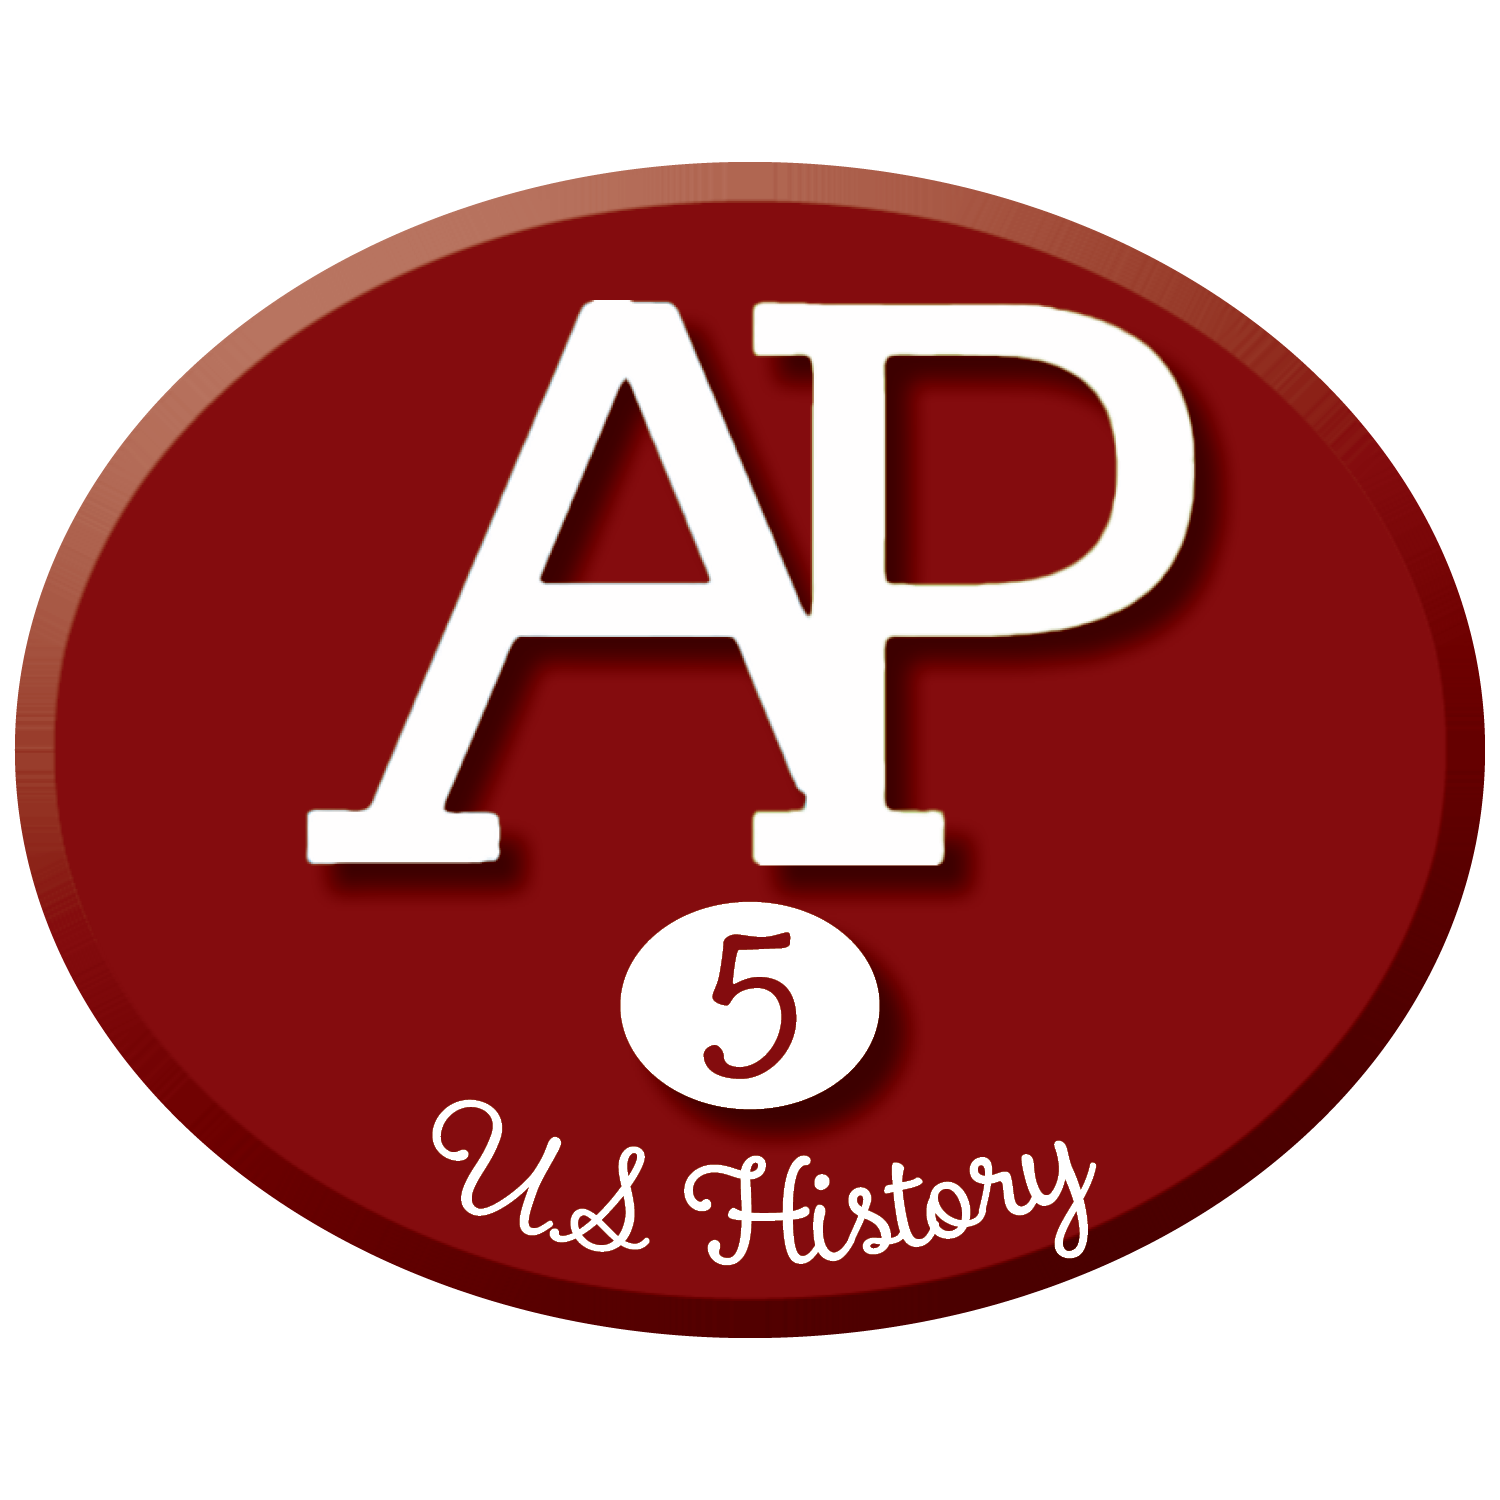 AP 5 US History